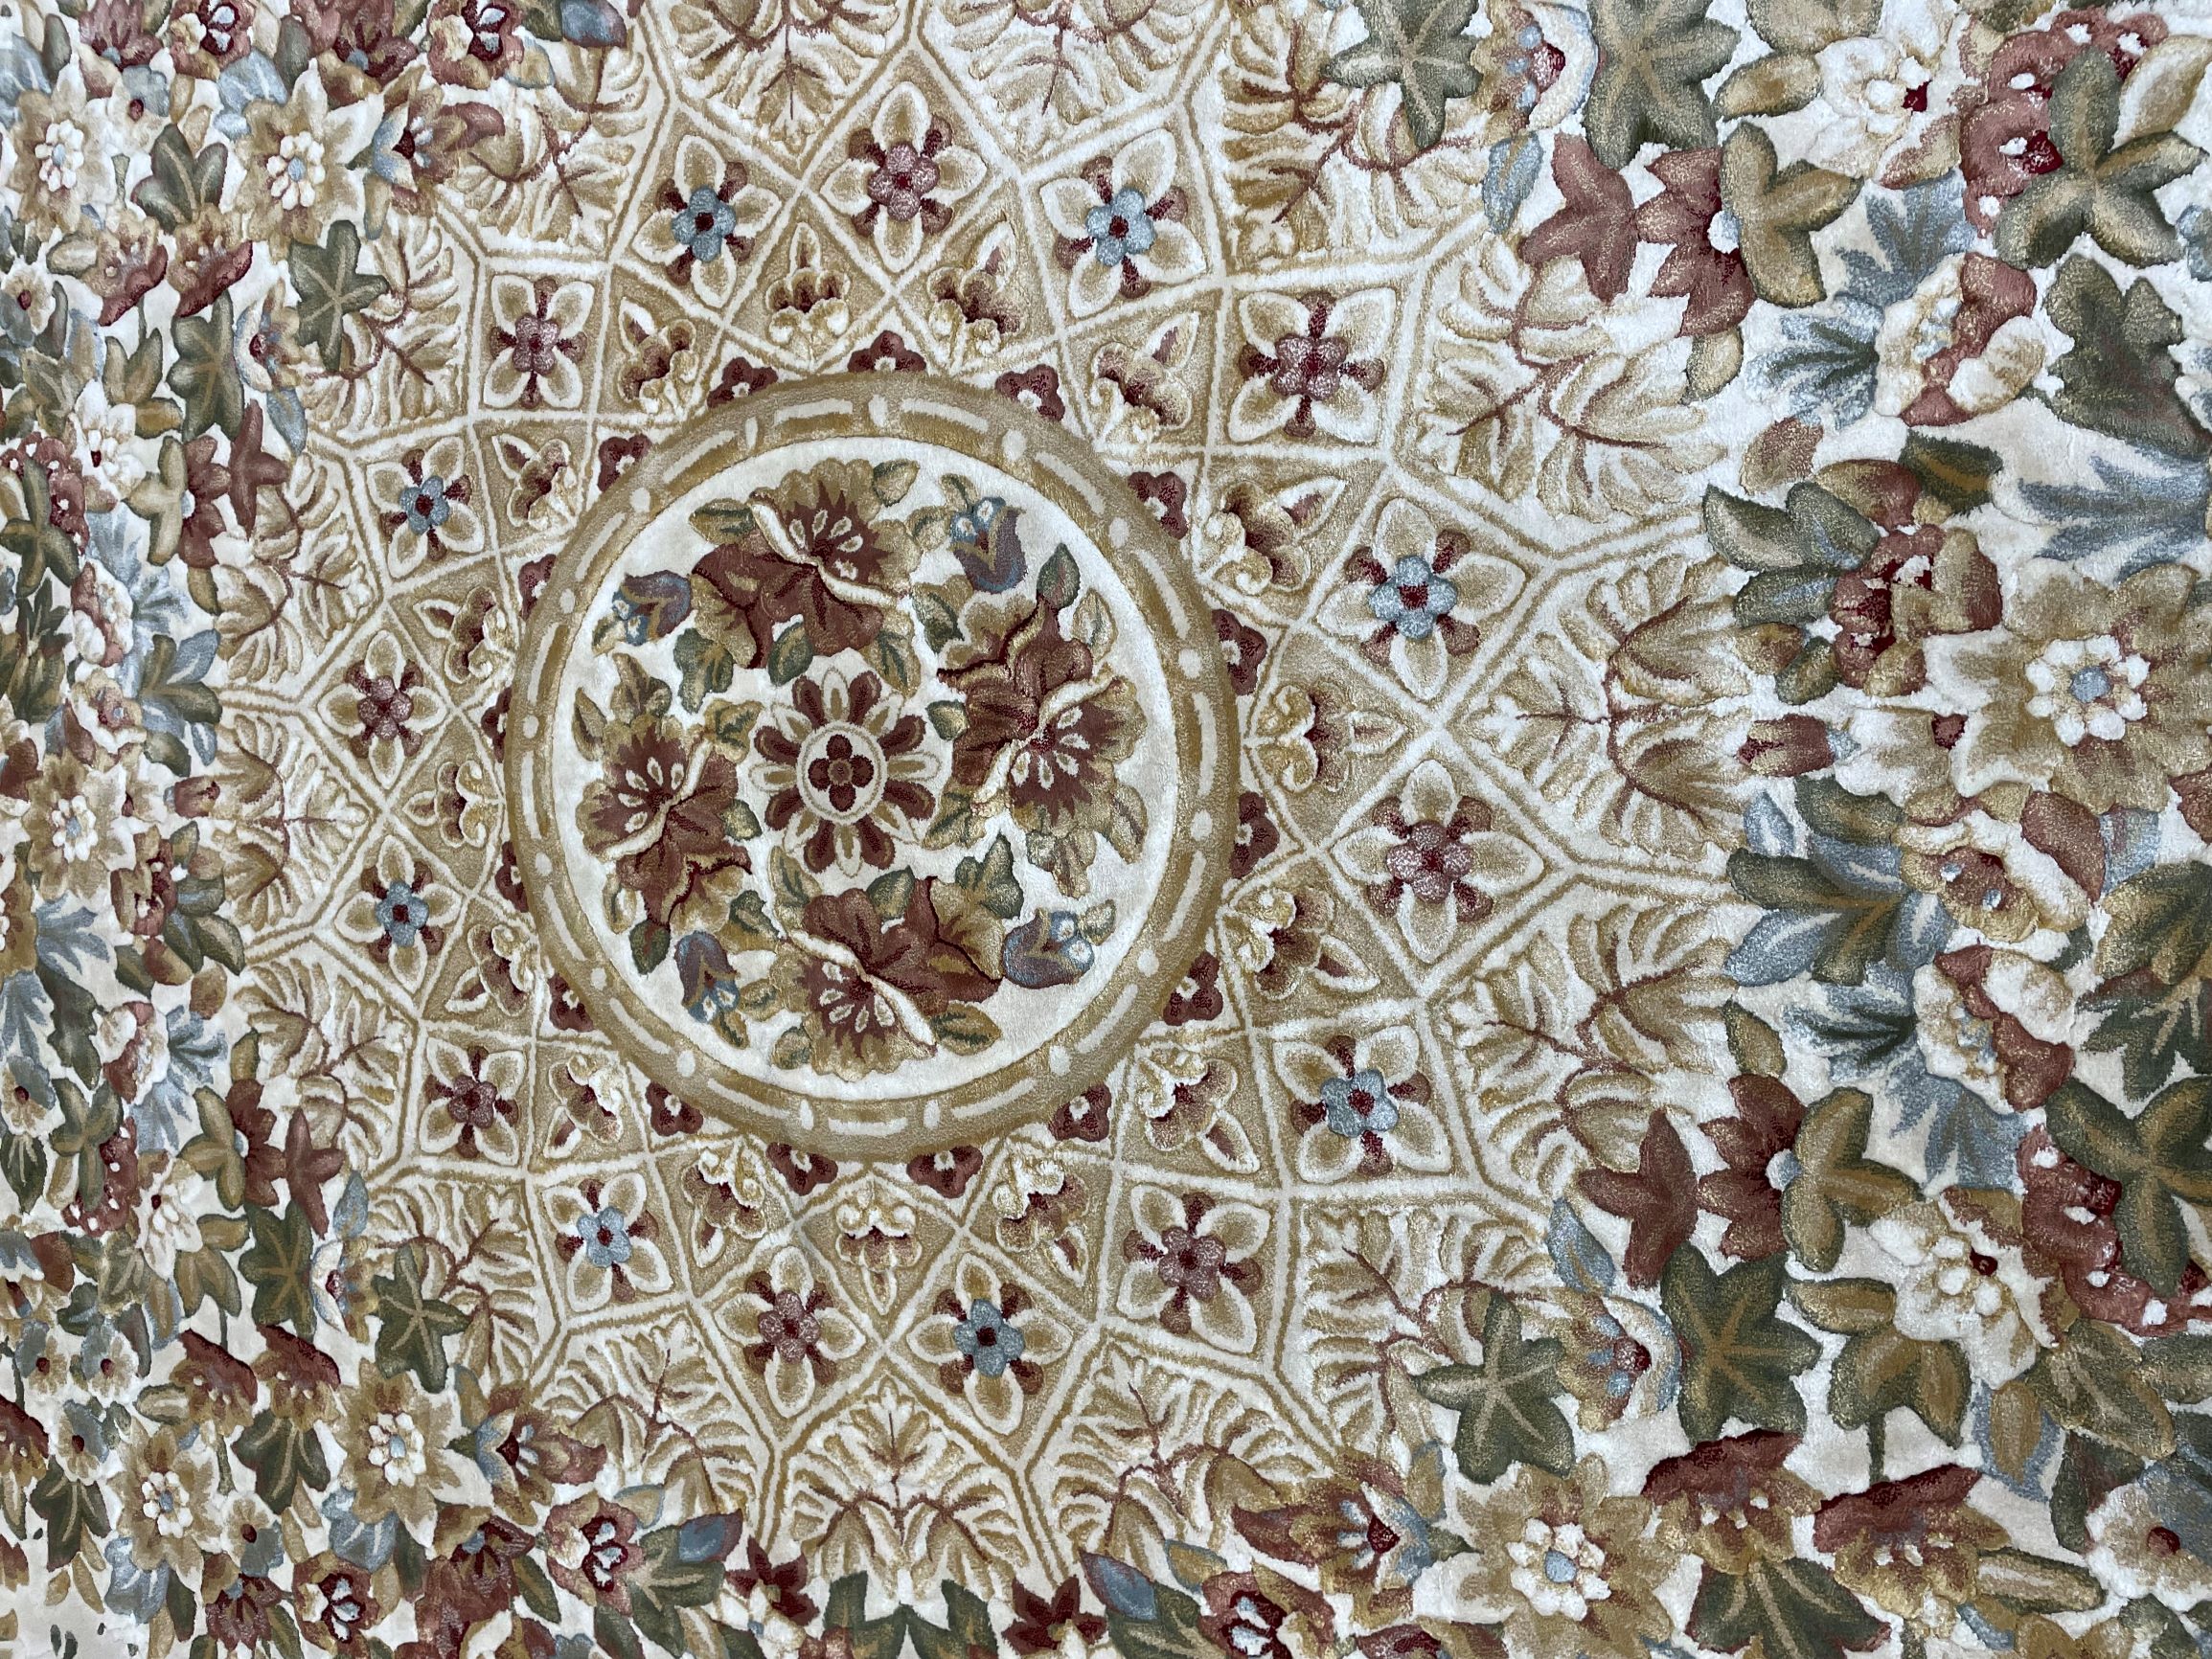 Gold & cream ground full pile Oriental carpet 350cm by 240cm - Image 3 of 8